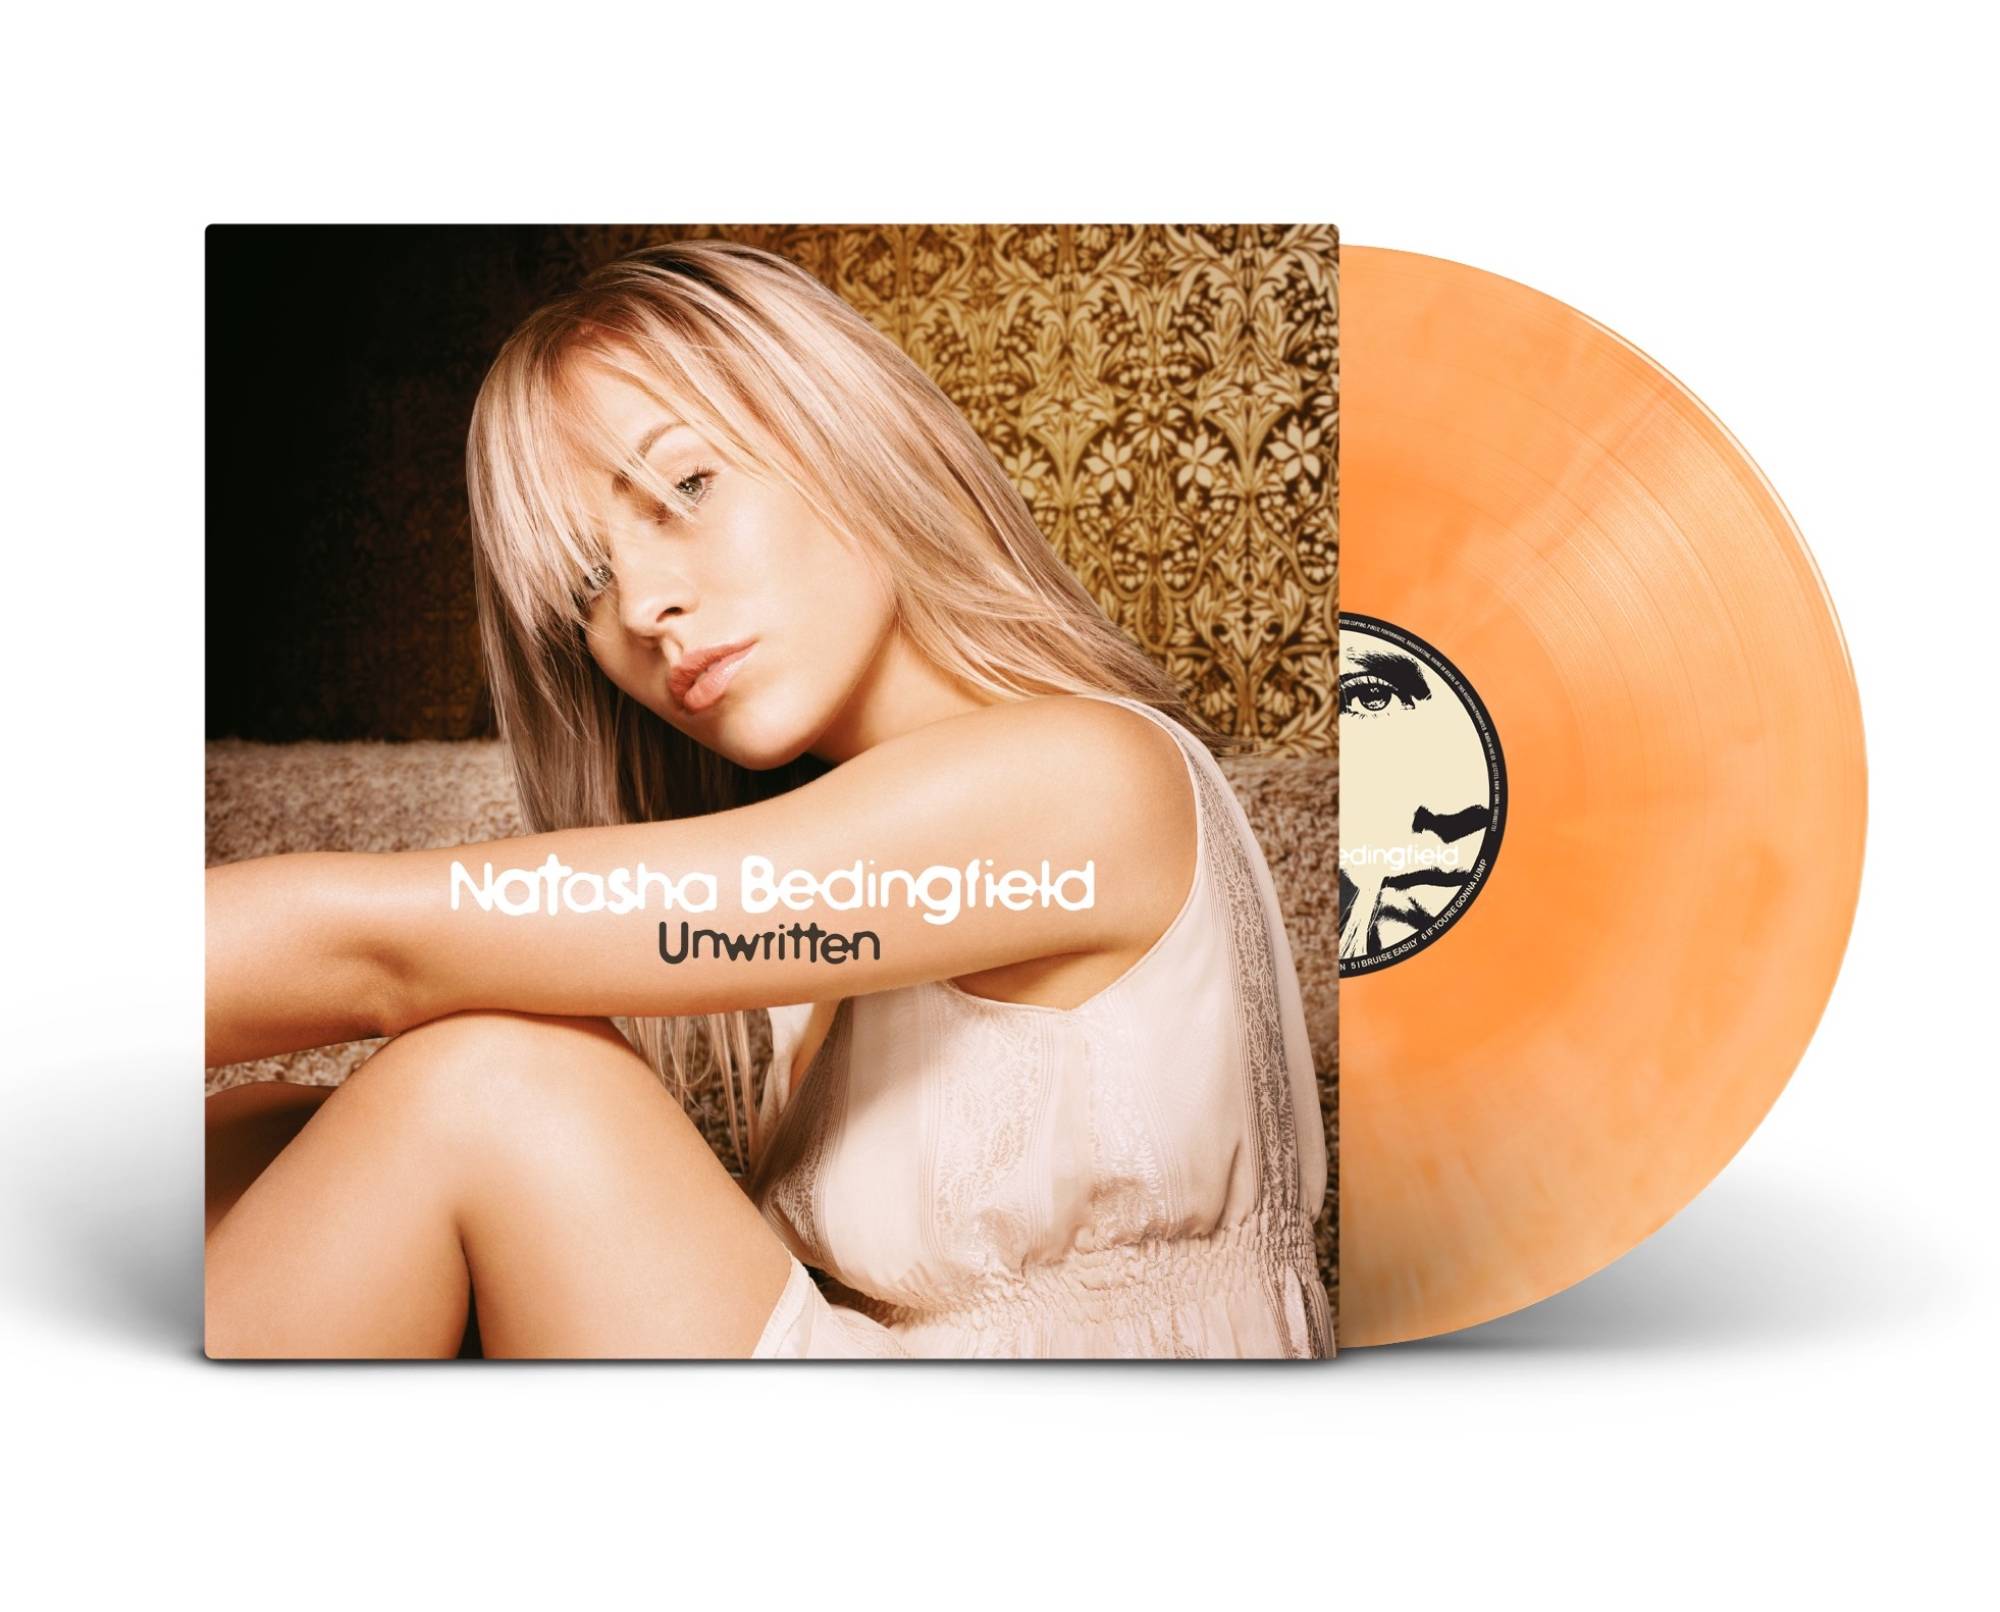 Natasha Bedingfield 'Unwritten' re-issue vinyl pressing. Credit: PRESS